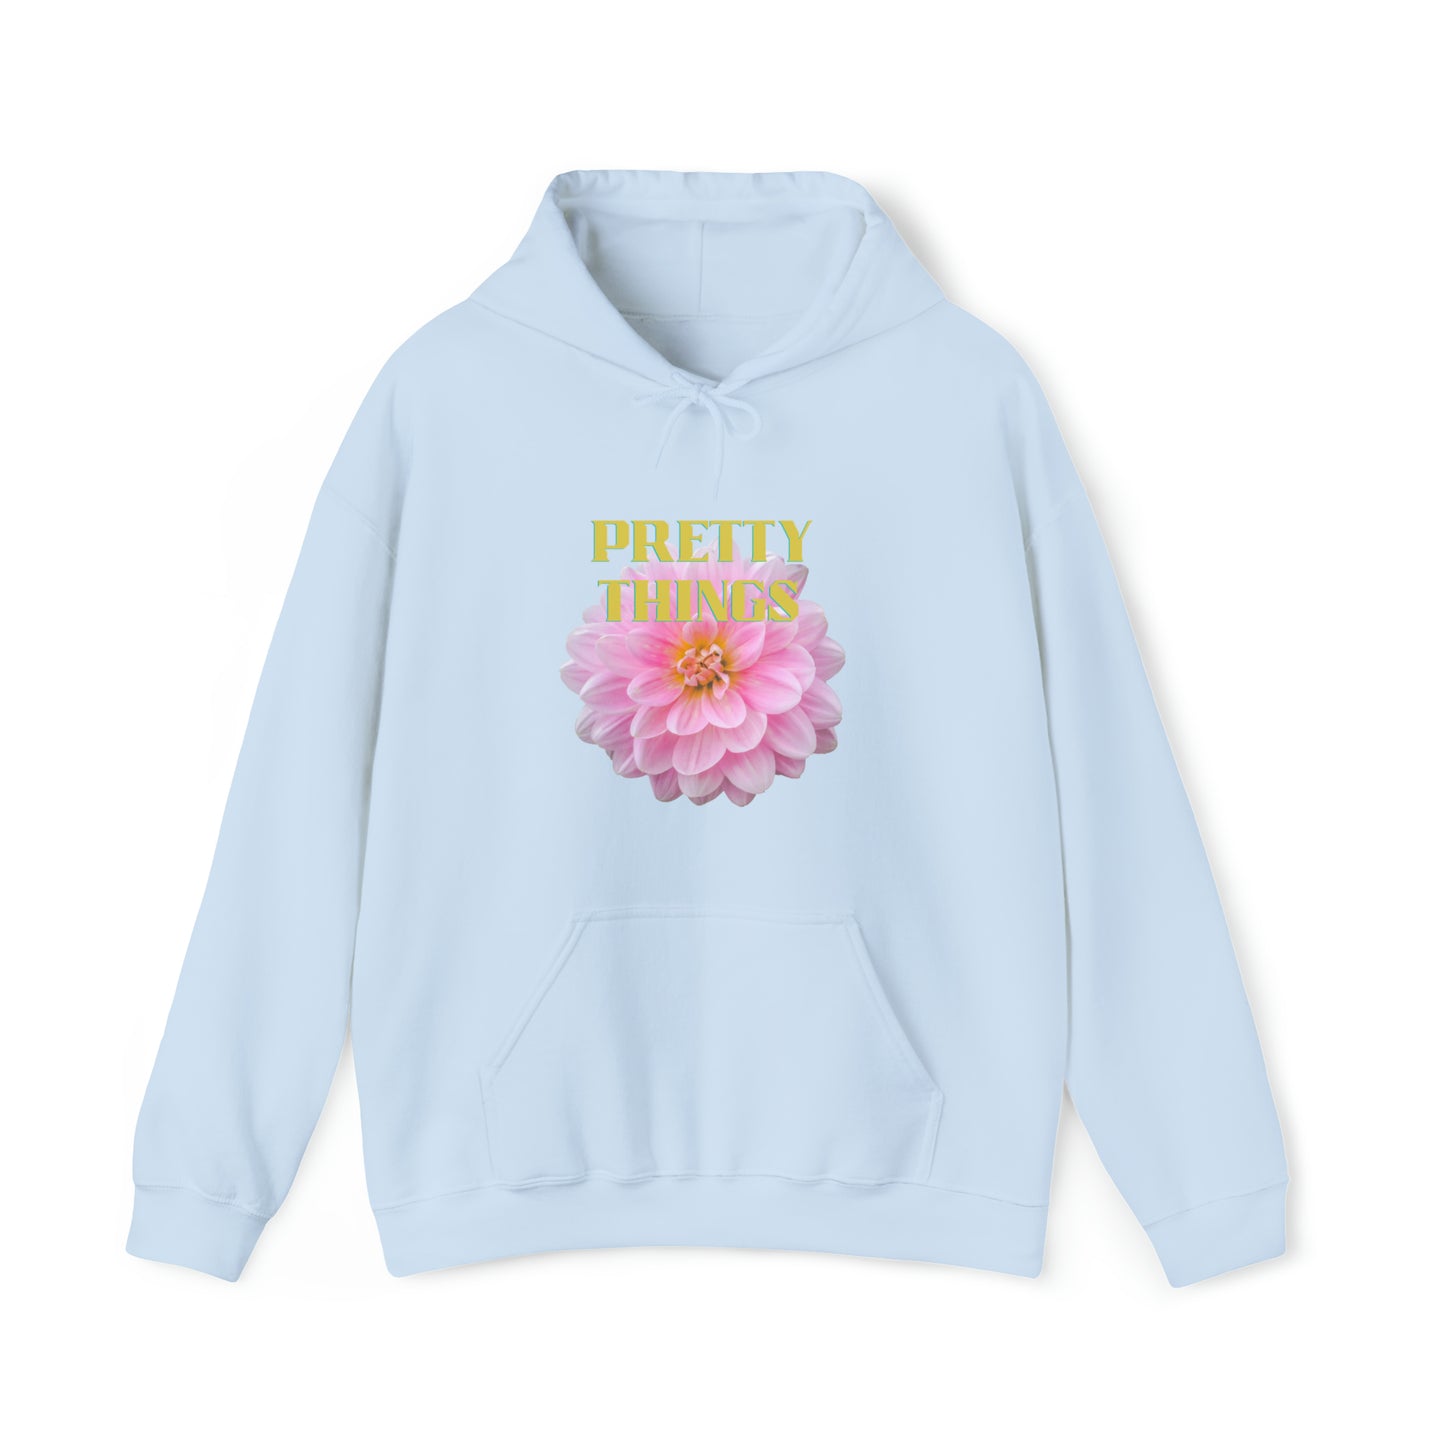 Pretty Things Pink peony hoodie gift